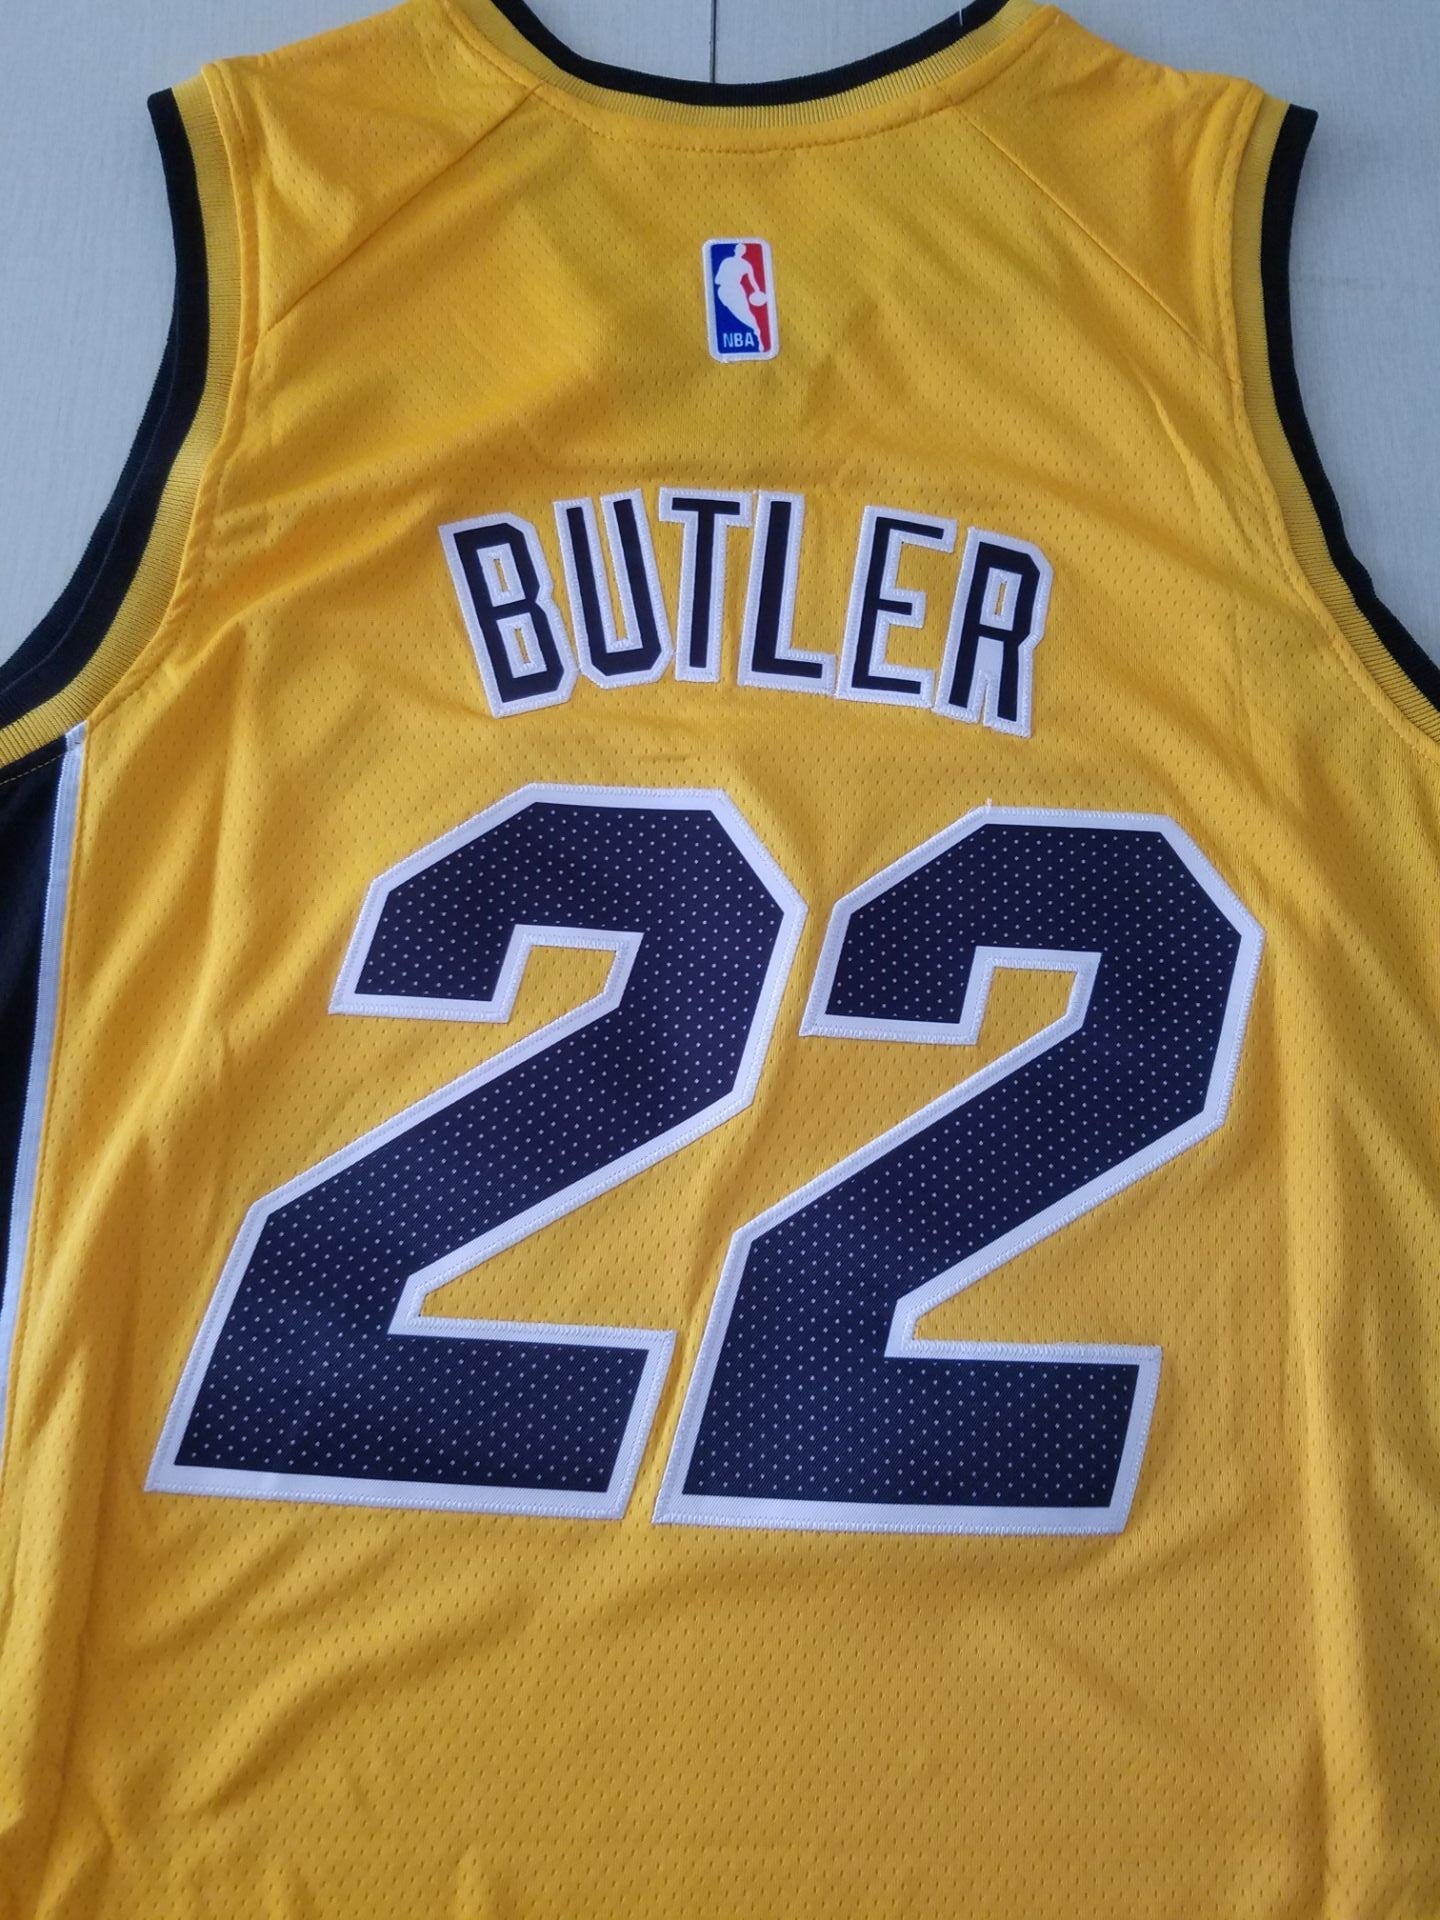 Miami Heat Jimmy Butler #22 NBA Swingman-Trikot für Herren in Gelb